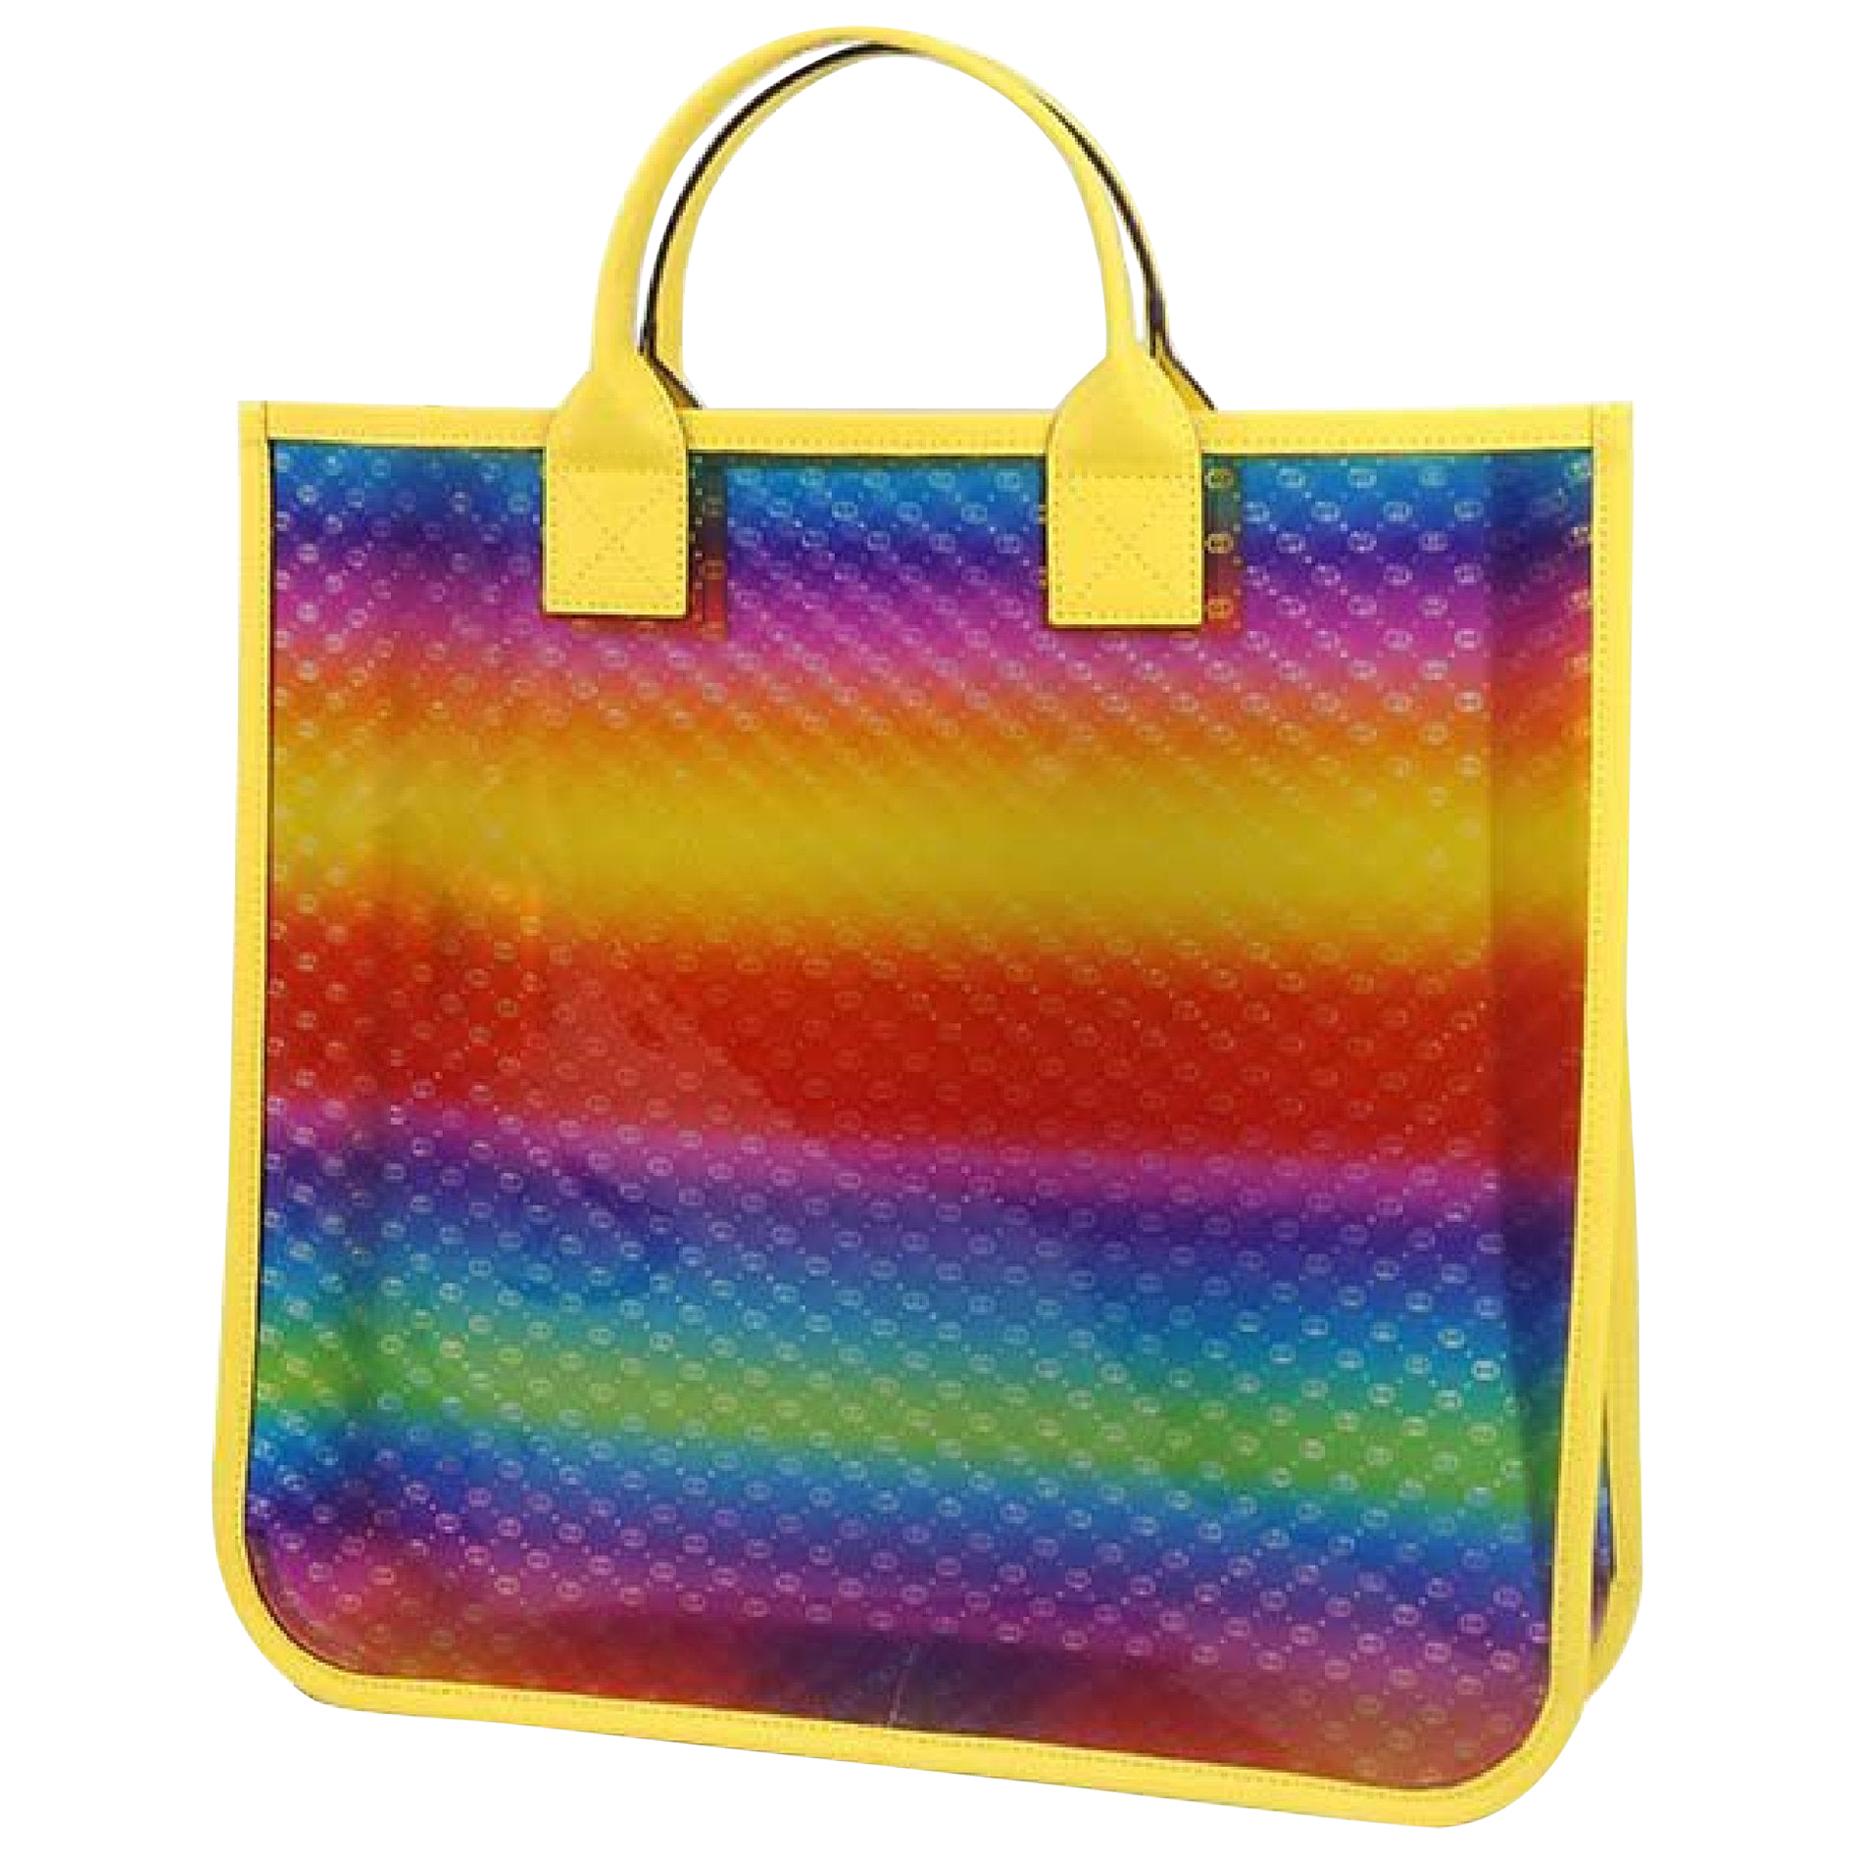 GUCCI clear tote GG Rainbow Womens tote bag 550763 yellow x Rainbow